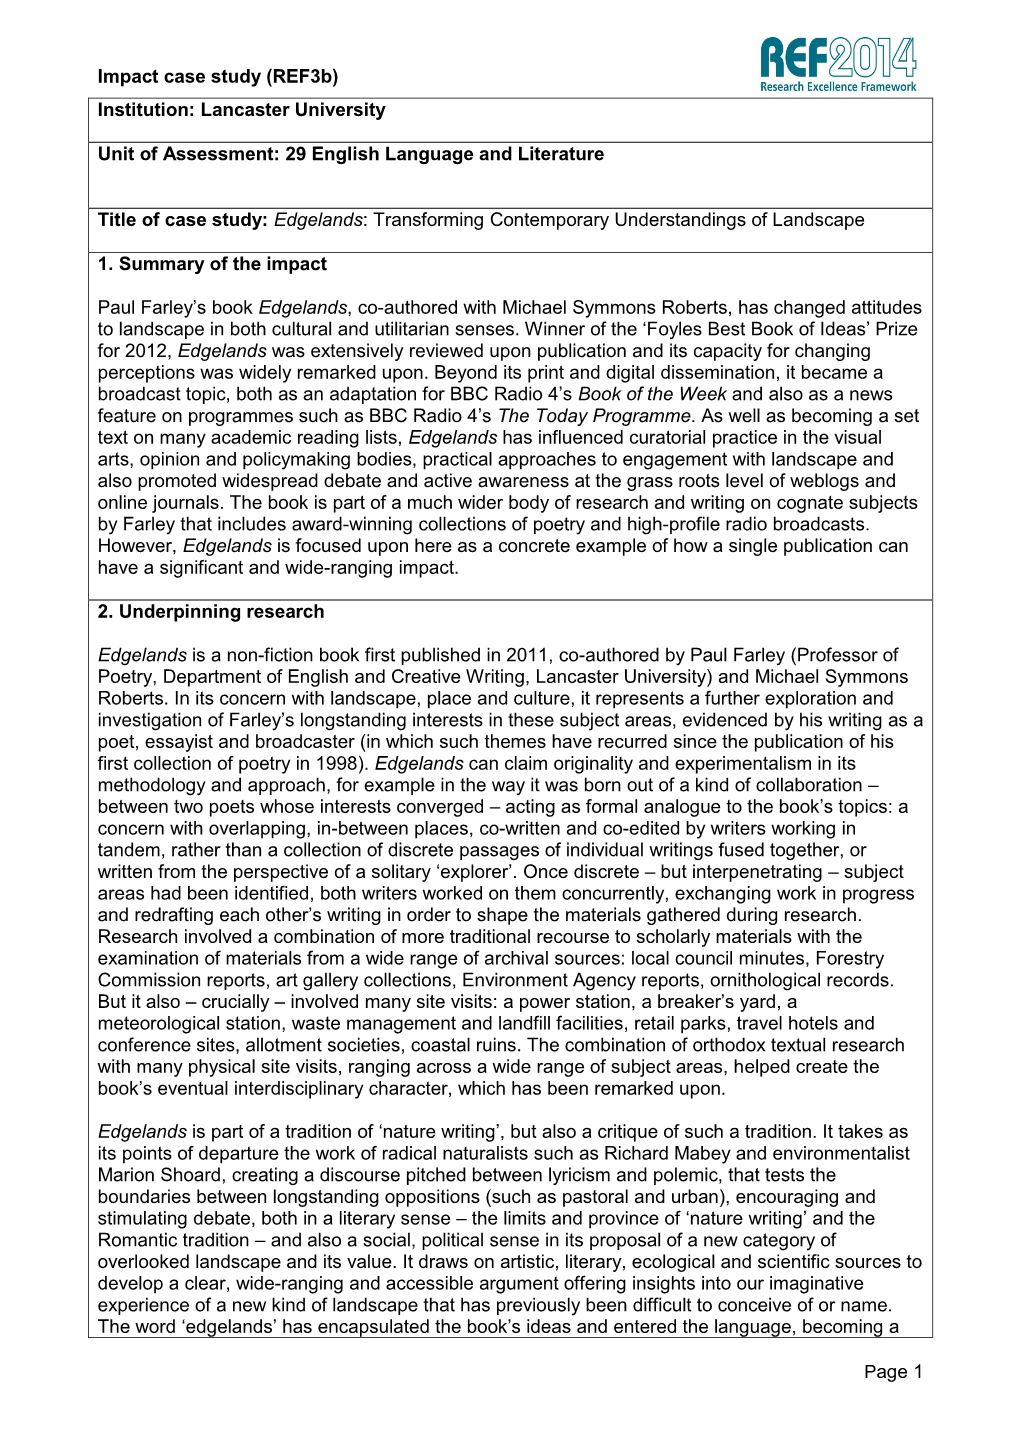 Impact Case Study (Ref3b) Institution: Lancaster University